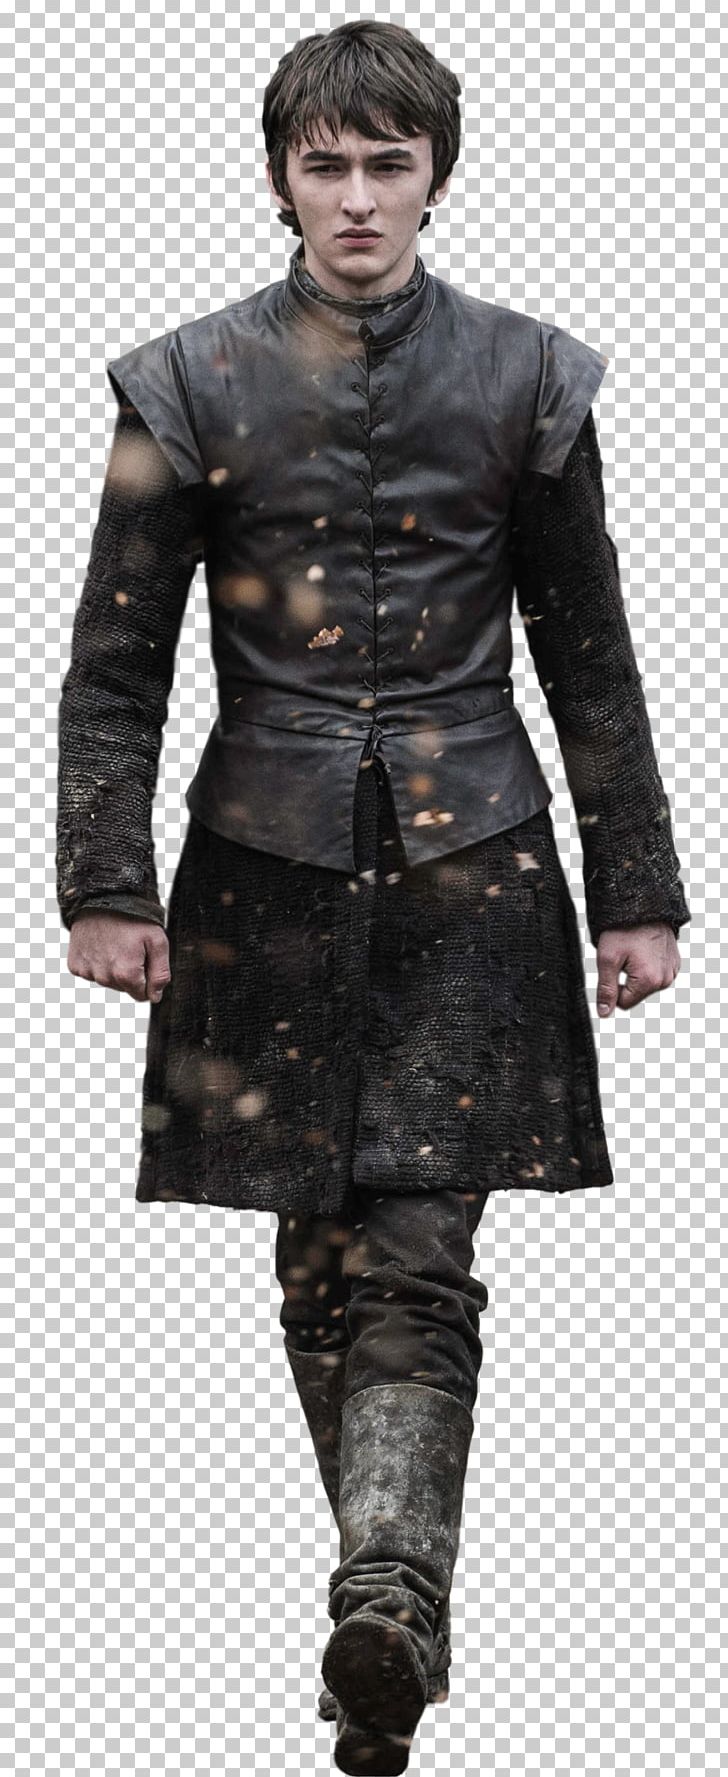 Bran Stark Sansa Stark Game Of Thrones Costume Jacket PNG, Clipart, Bran Stark, Clothing, Coat, Comic, Costume Free PNG Download